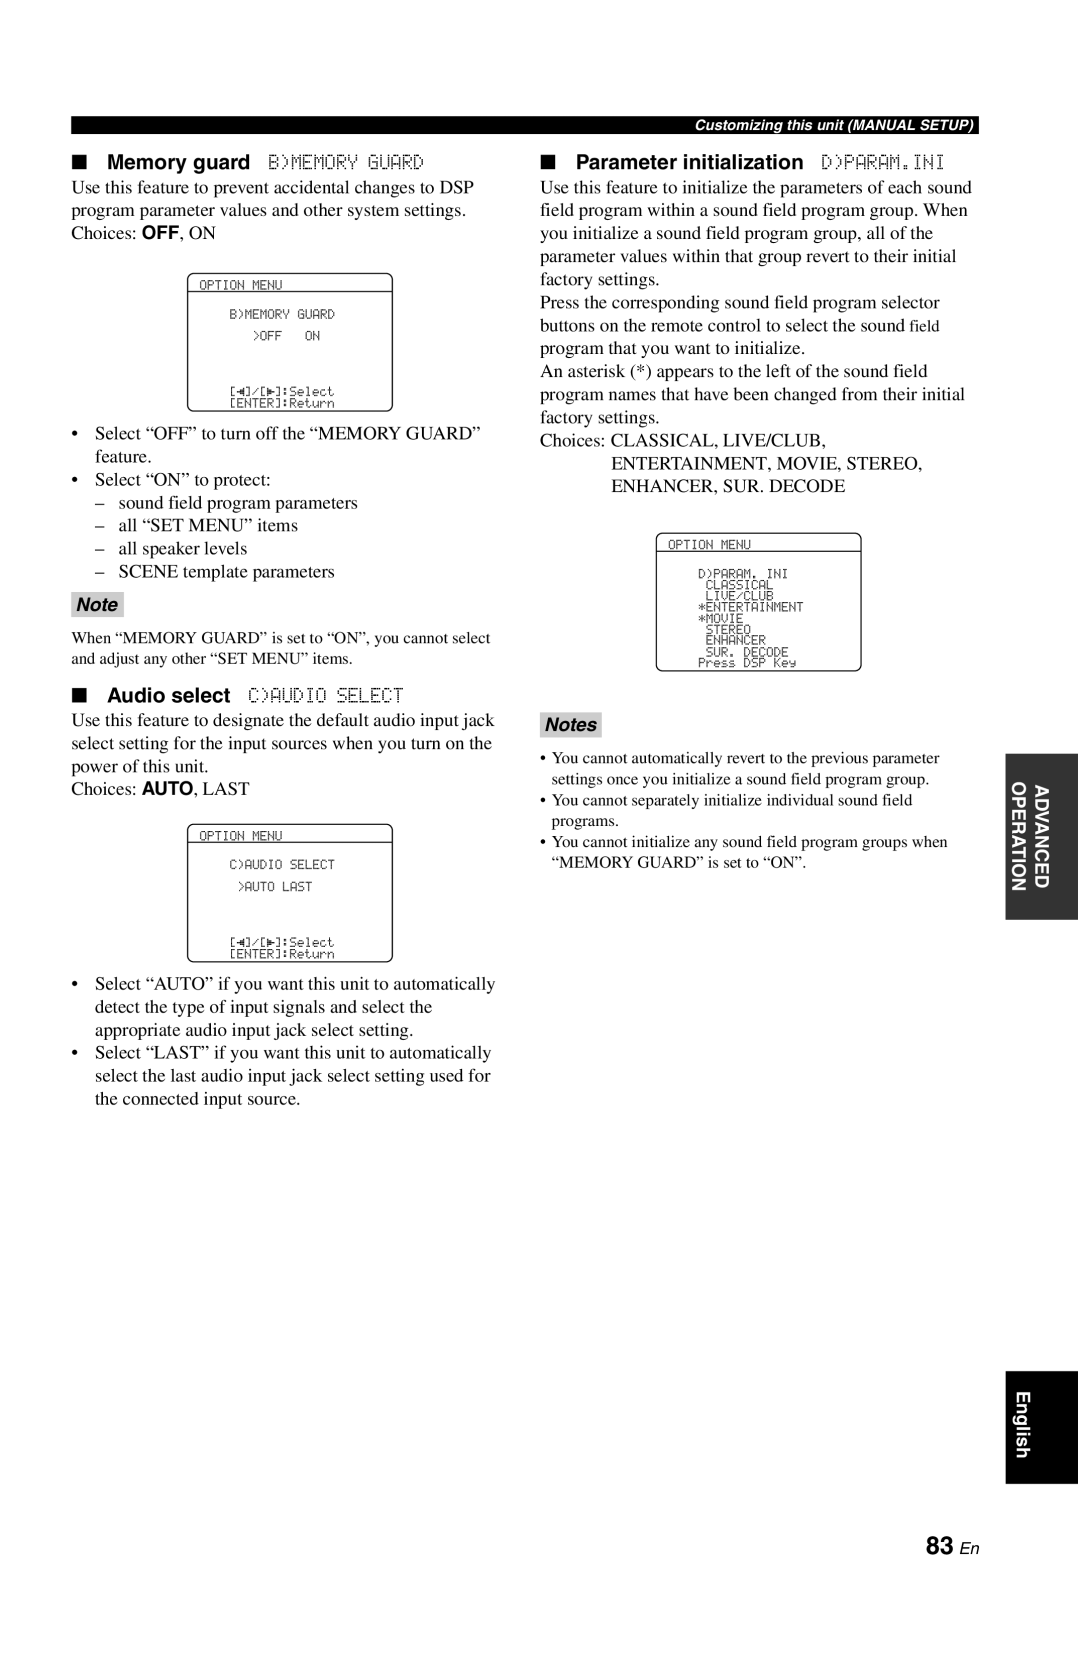 Yamaha RX-V861 owner manual 83 En, Parameter initialization DPARAM.INI, Notes 